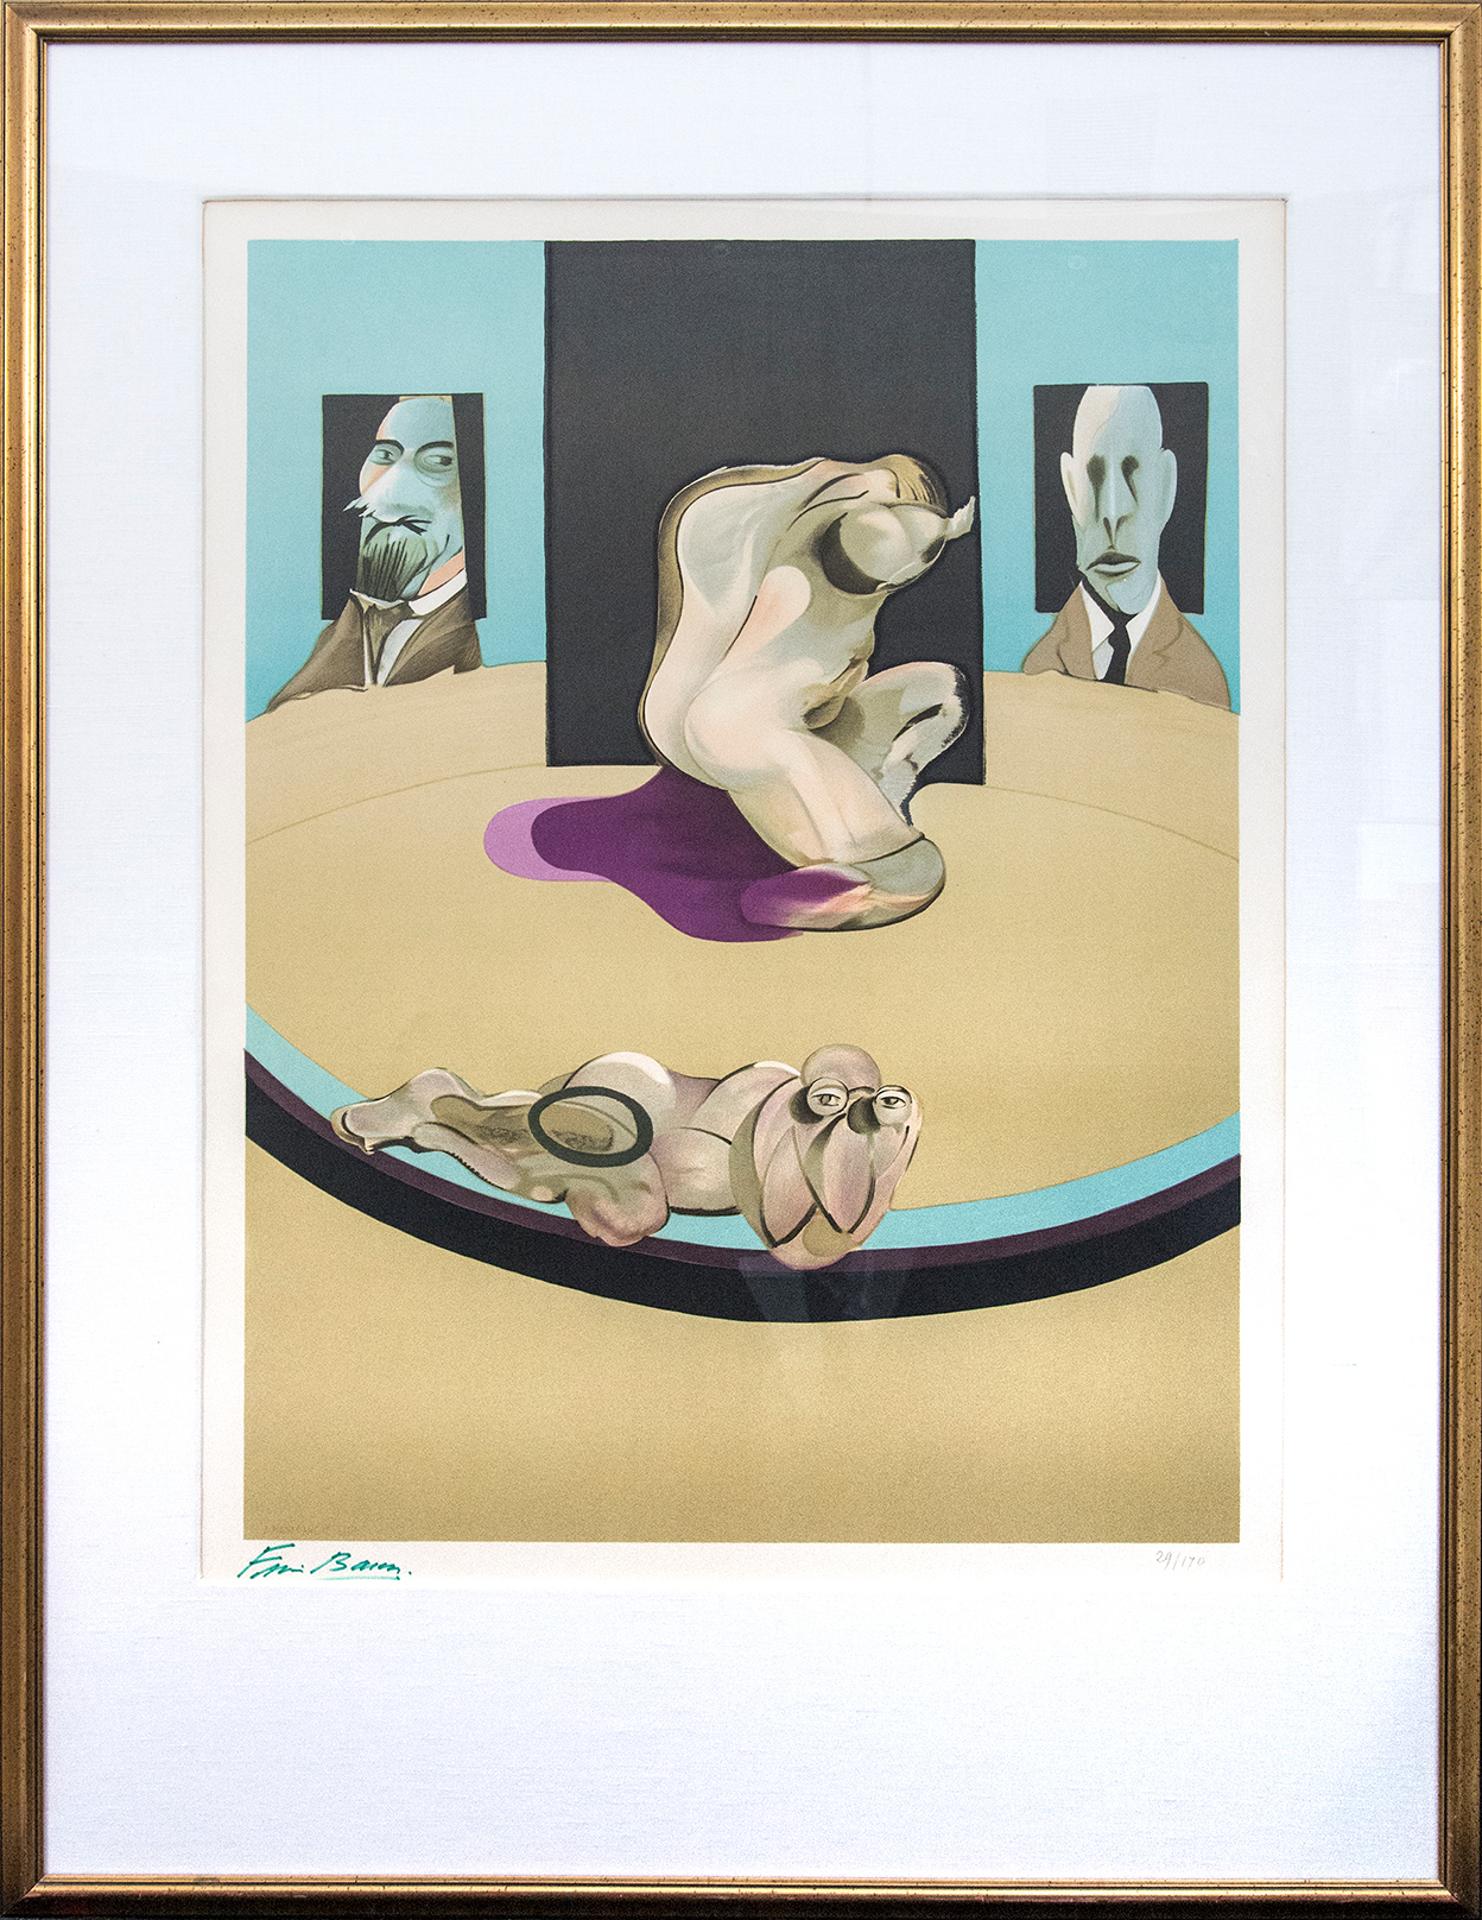 Francis Bacon (1909-1992) - Metropolitan Museum of Art poster, 1975